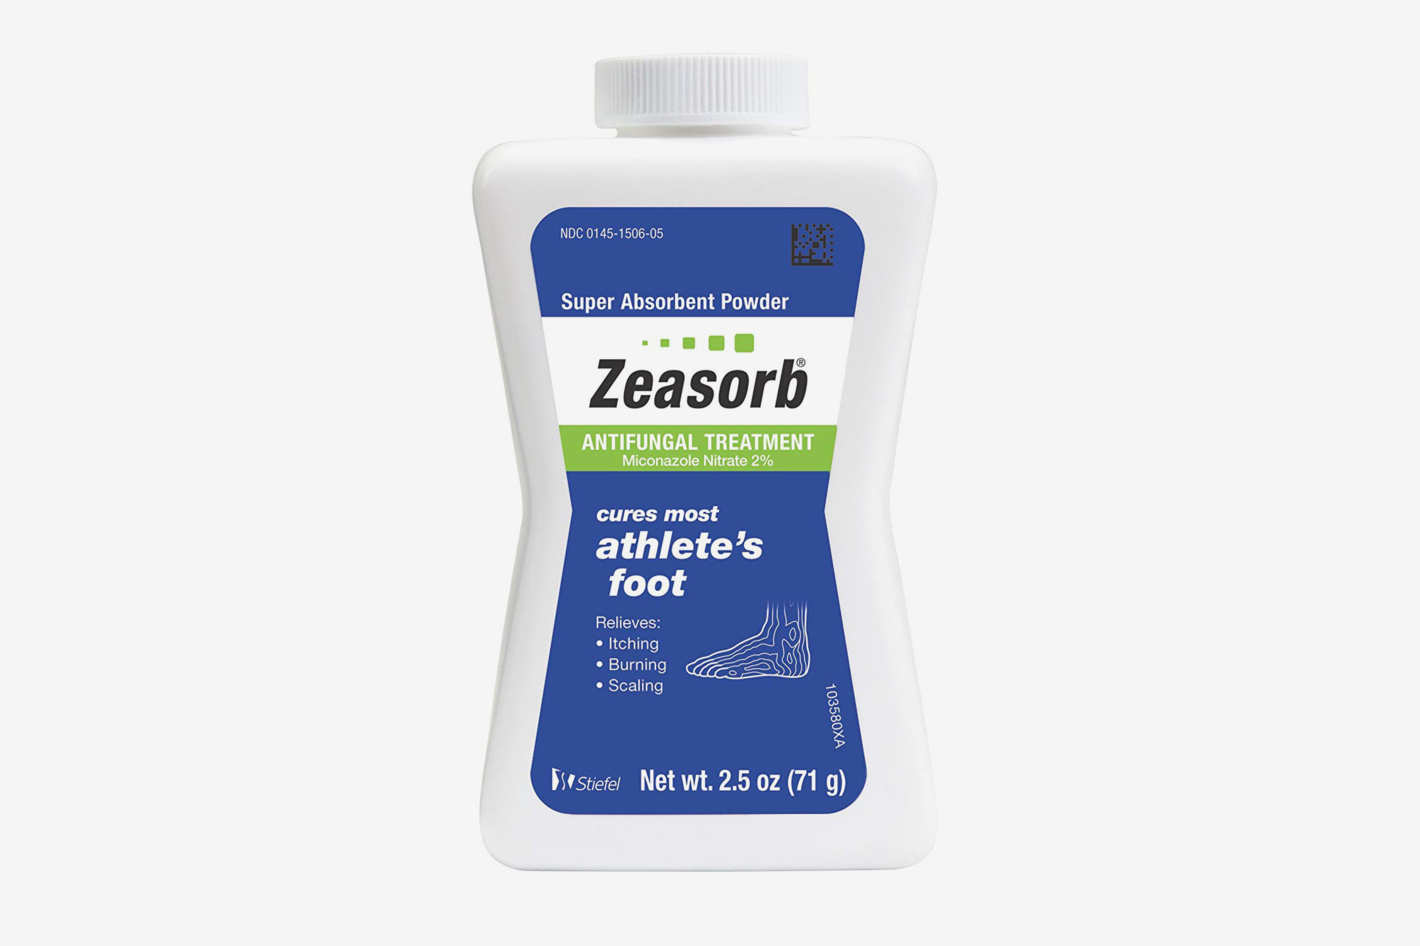 Zeasorb Antifungal Treatment Powder, Athlete’s Foot, 2.5oz